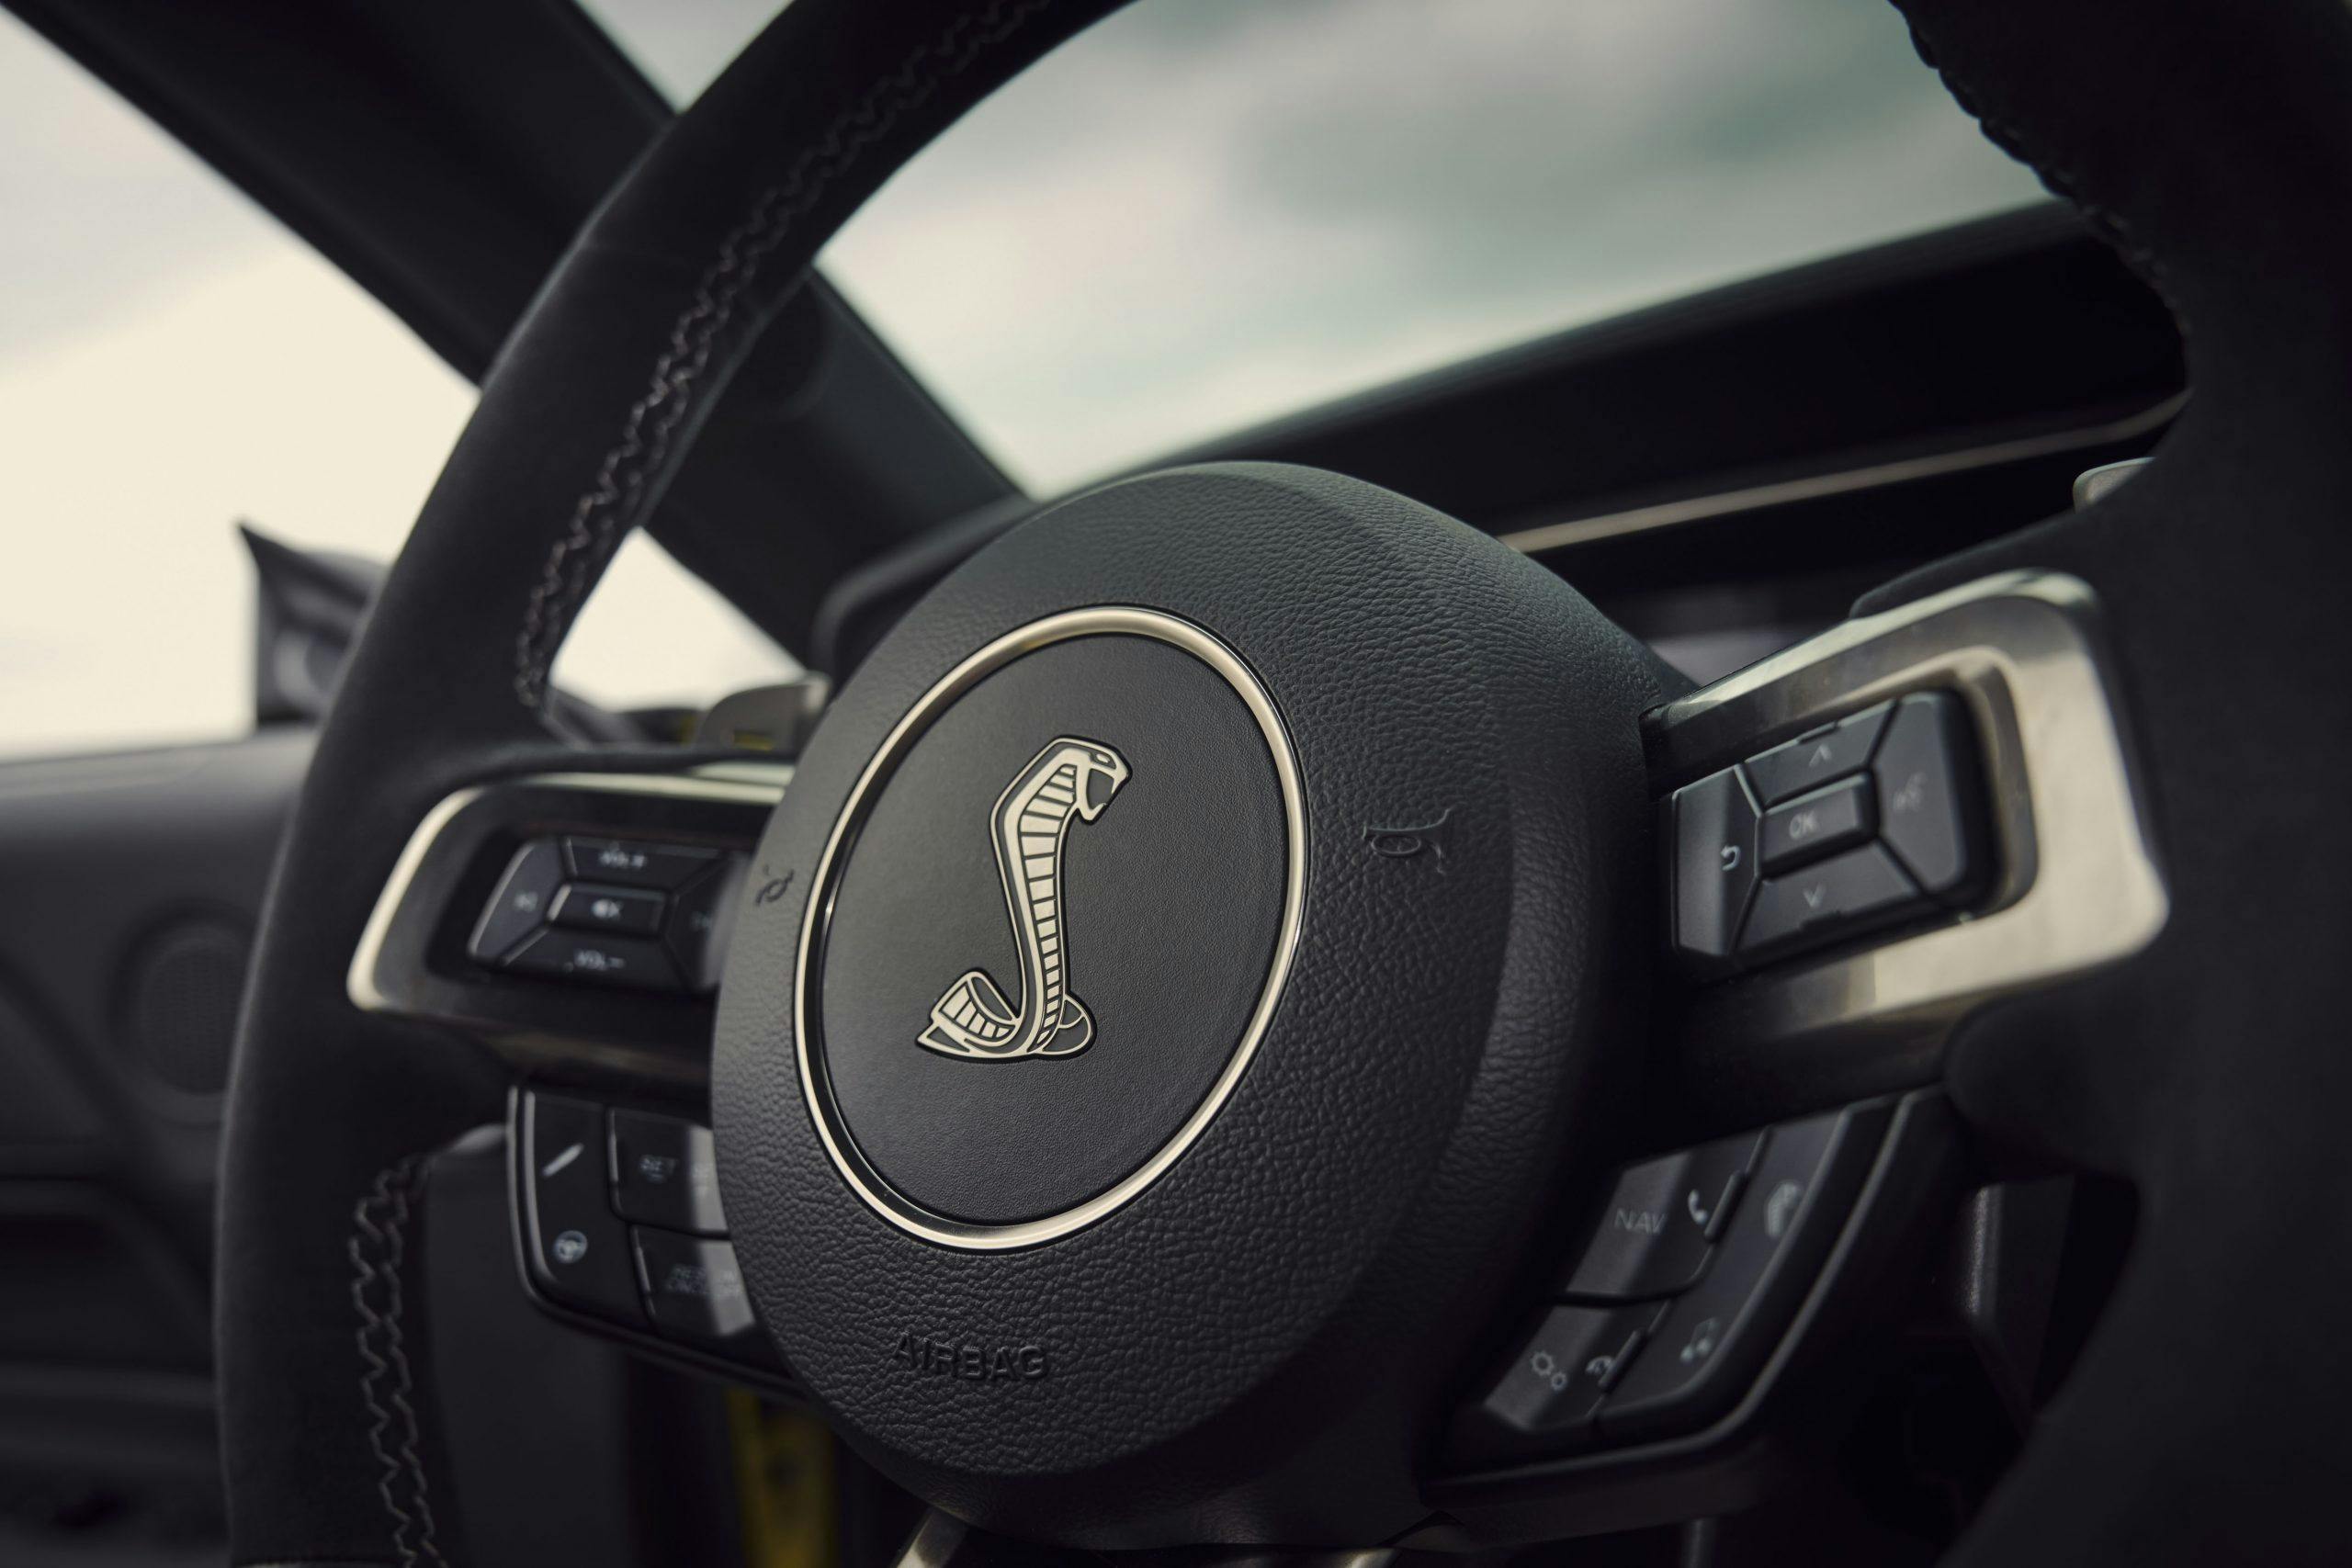 2021 Ford Mustang Shelby GT500 interior steering wheel cobra detail